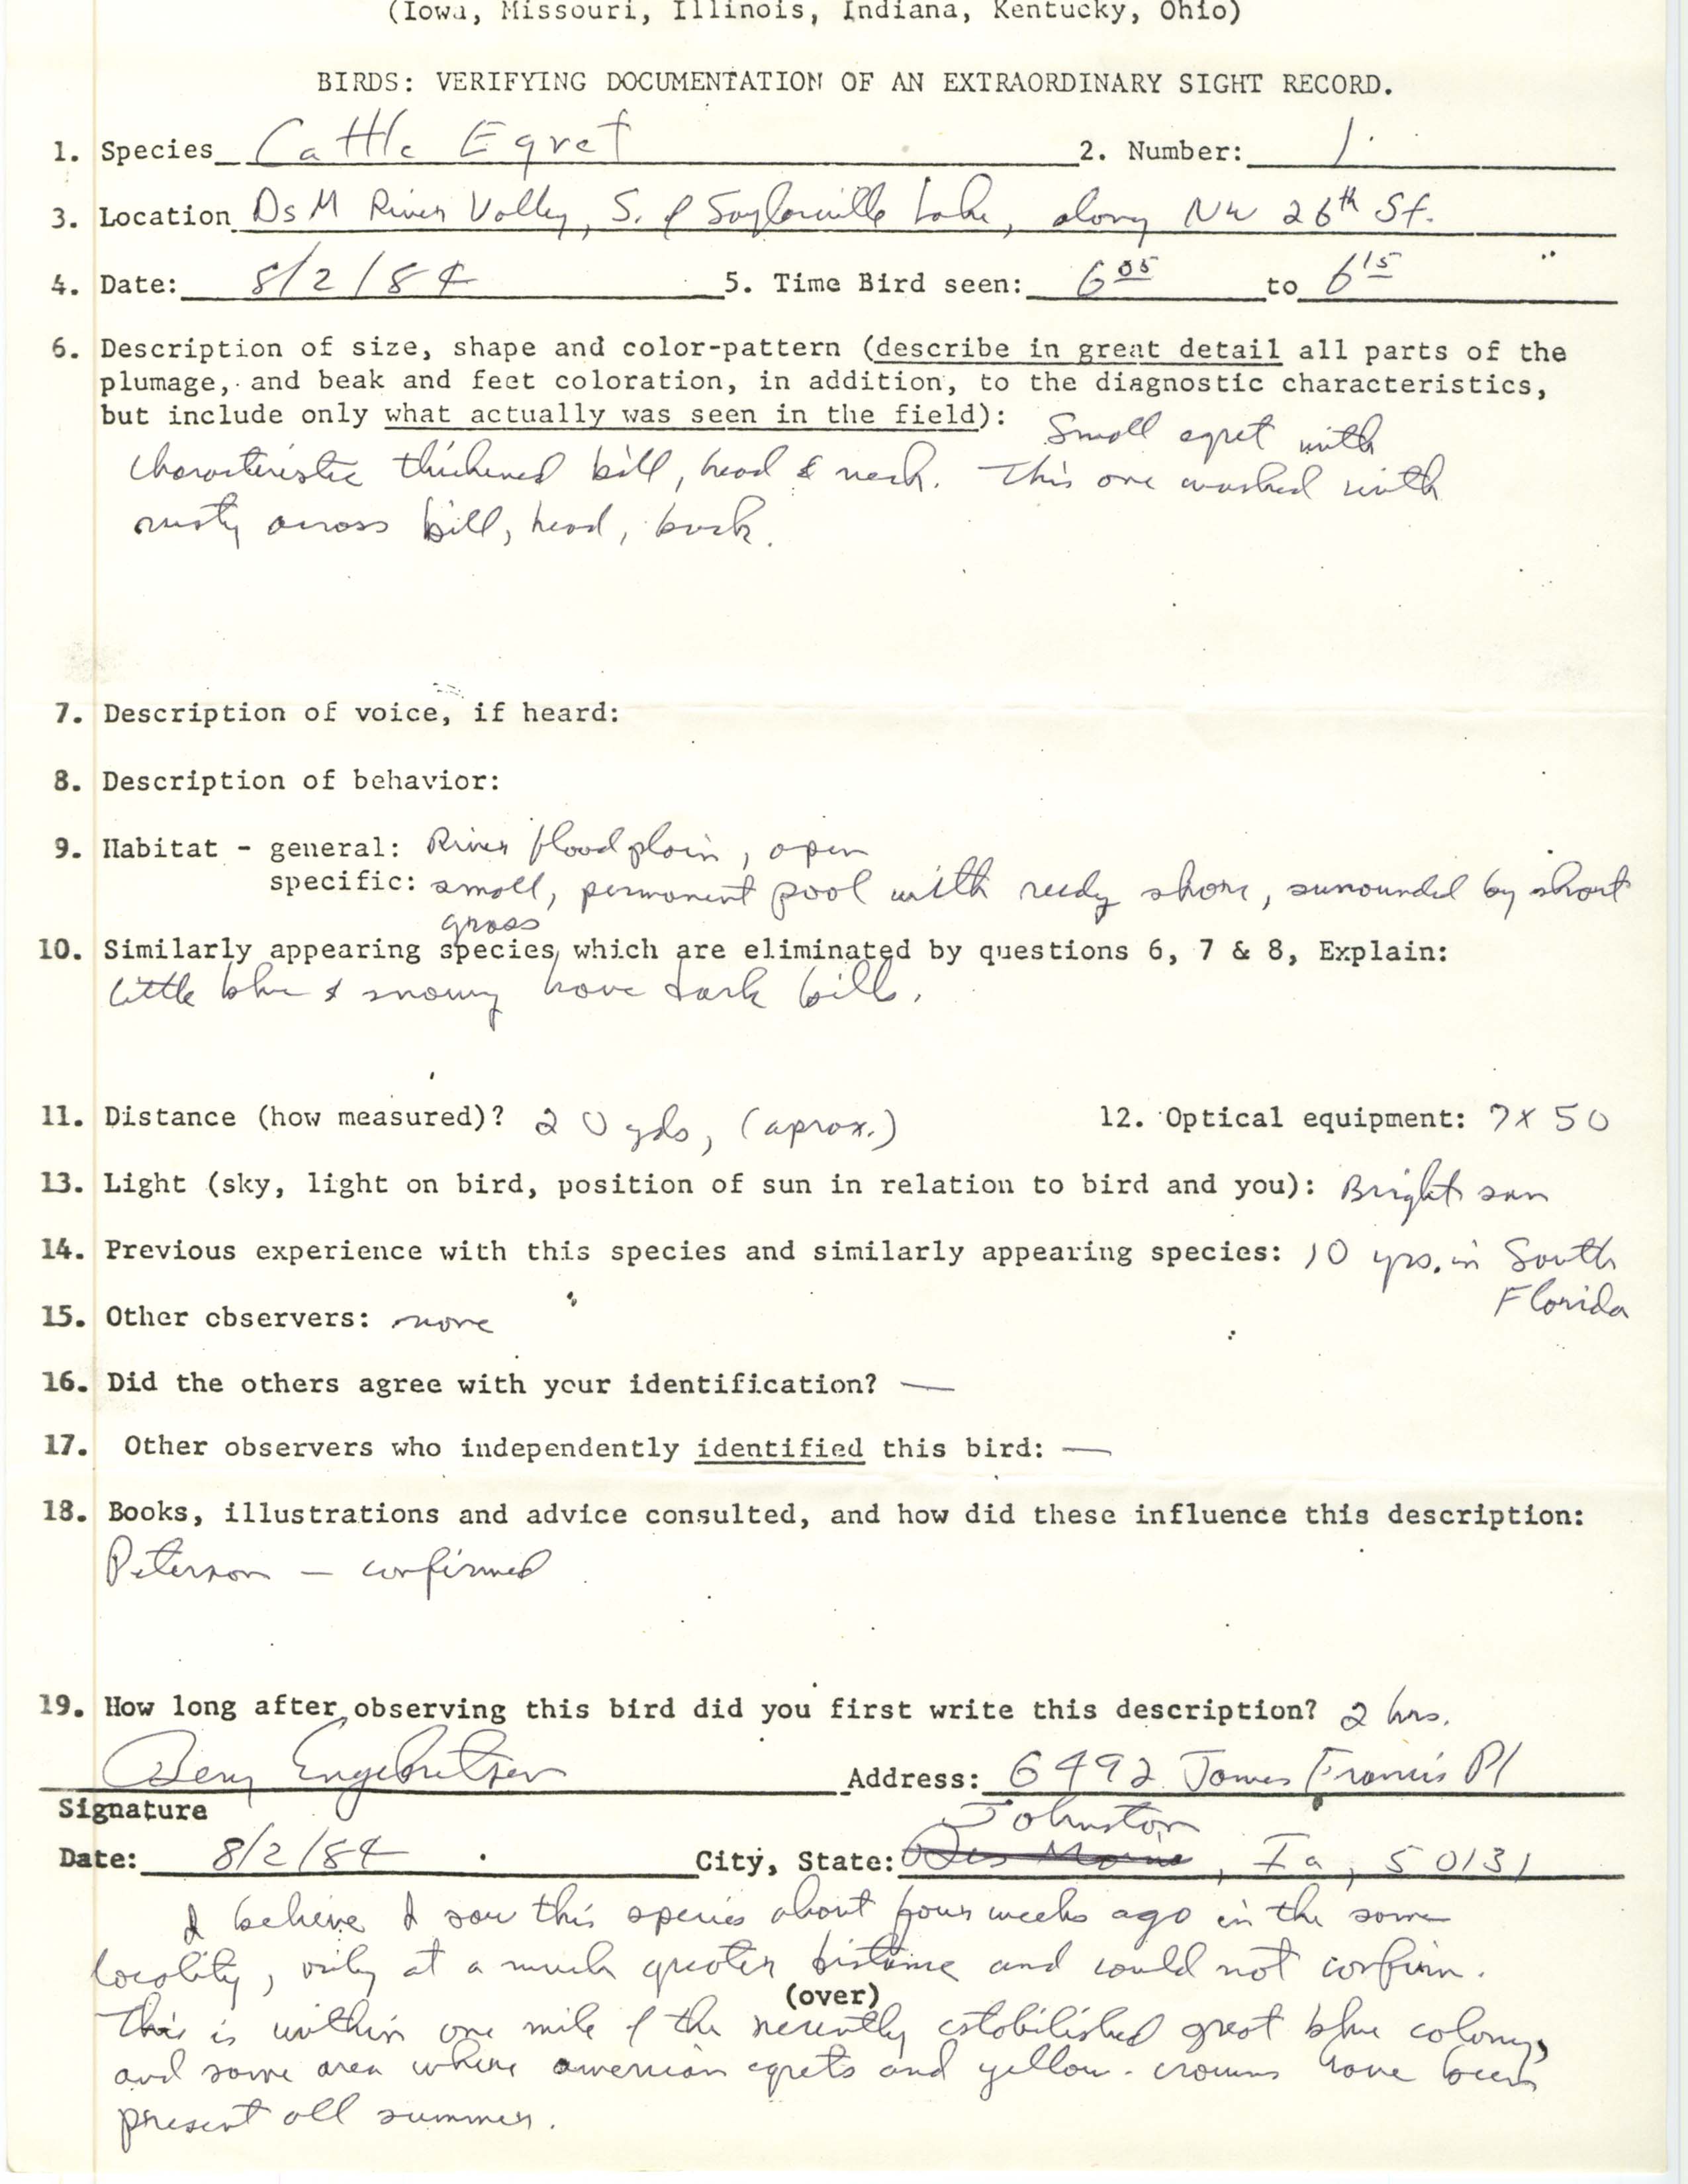 Rare bird documentation form for Cattle Egret at Des Moines River Valley at Saylorville Lake, 1984